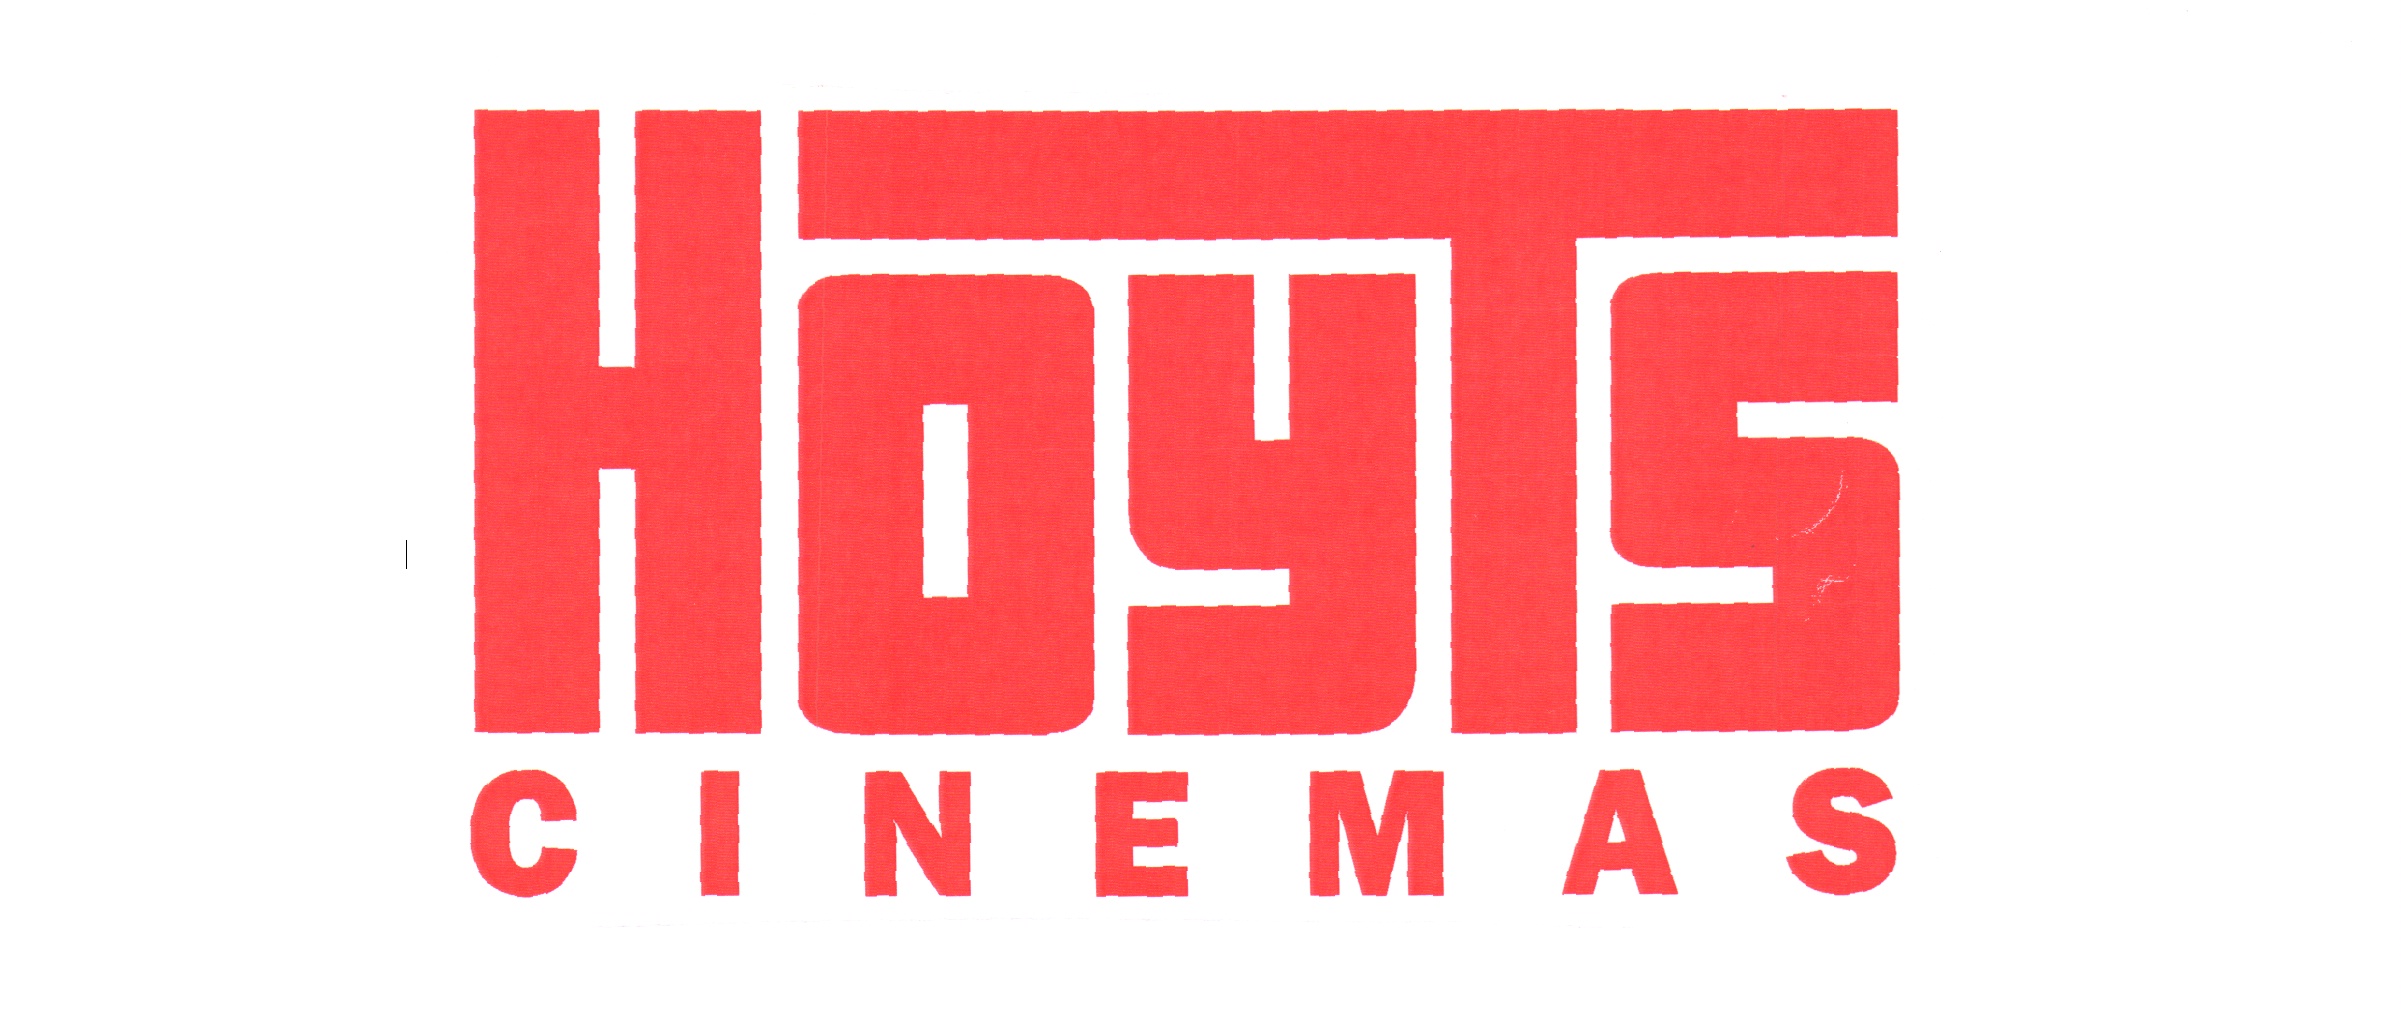 Hoyts Cinemas 14